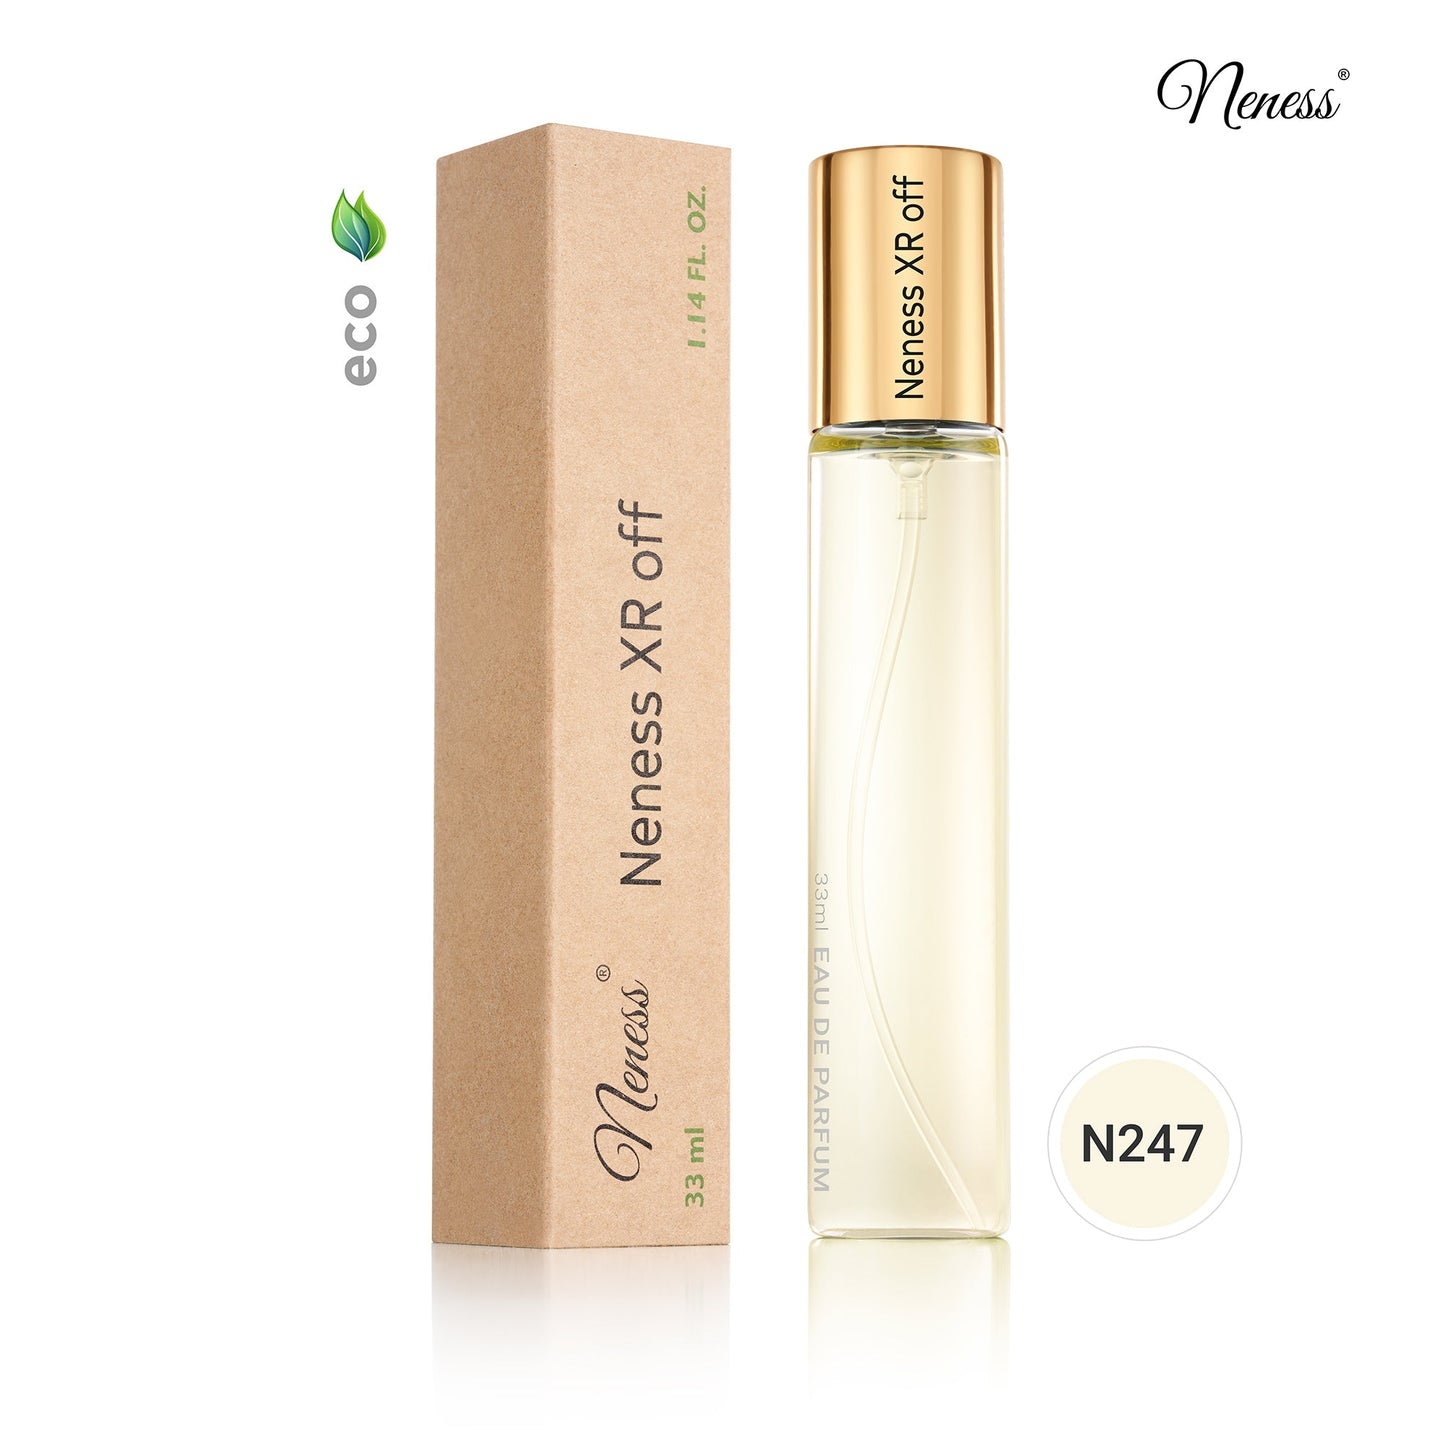 N247. Neness XR Off- 33 ml  Parfums unisexes